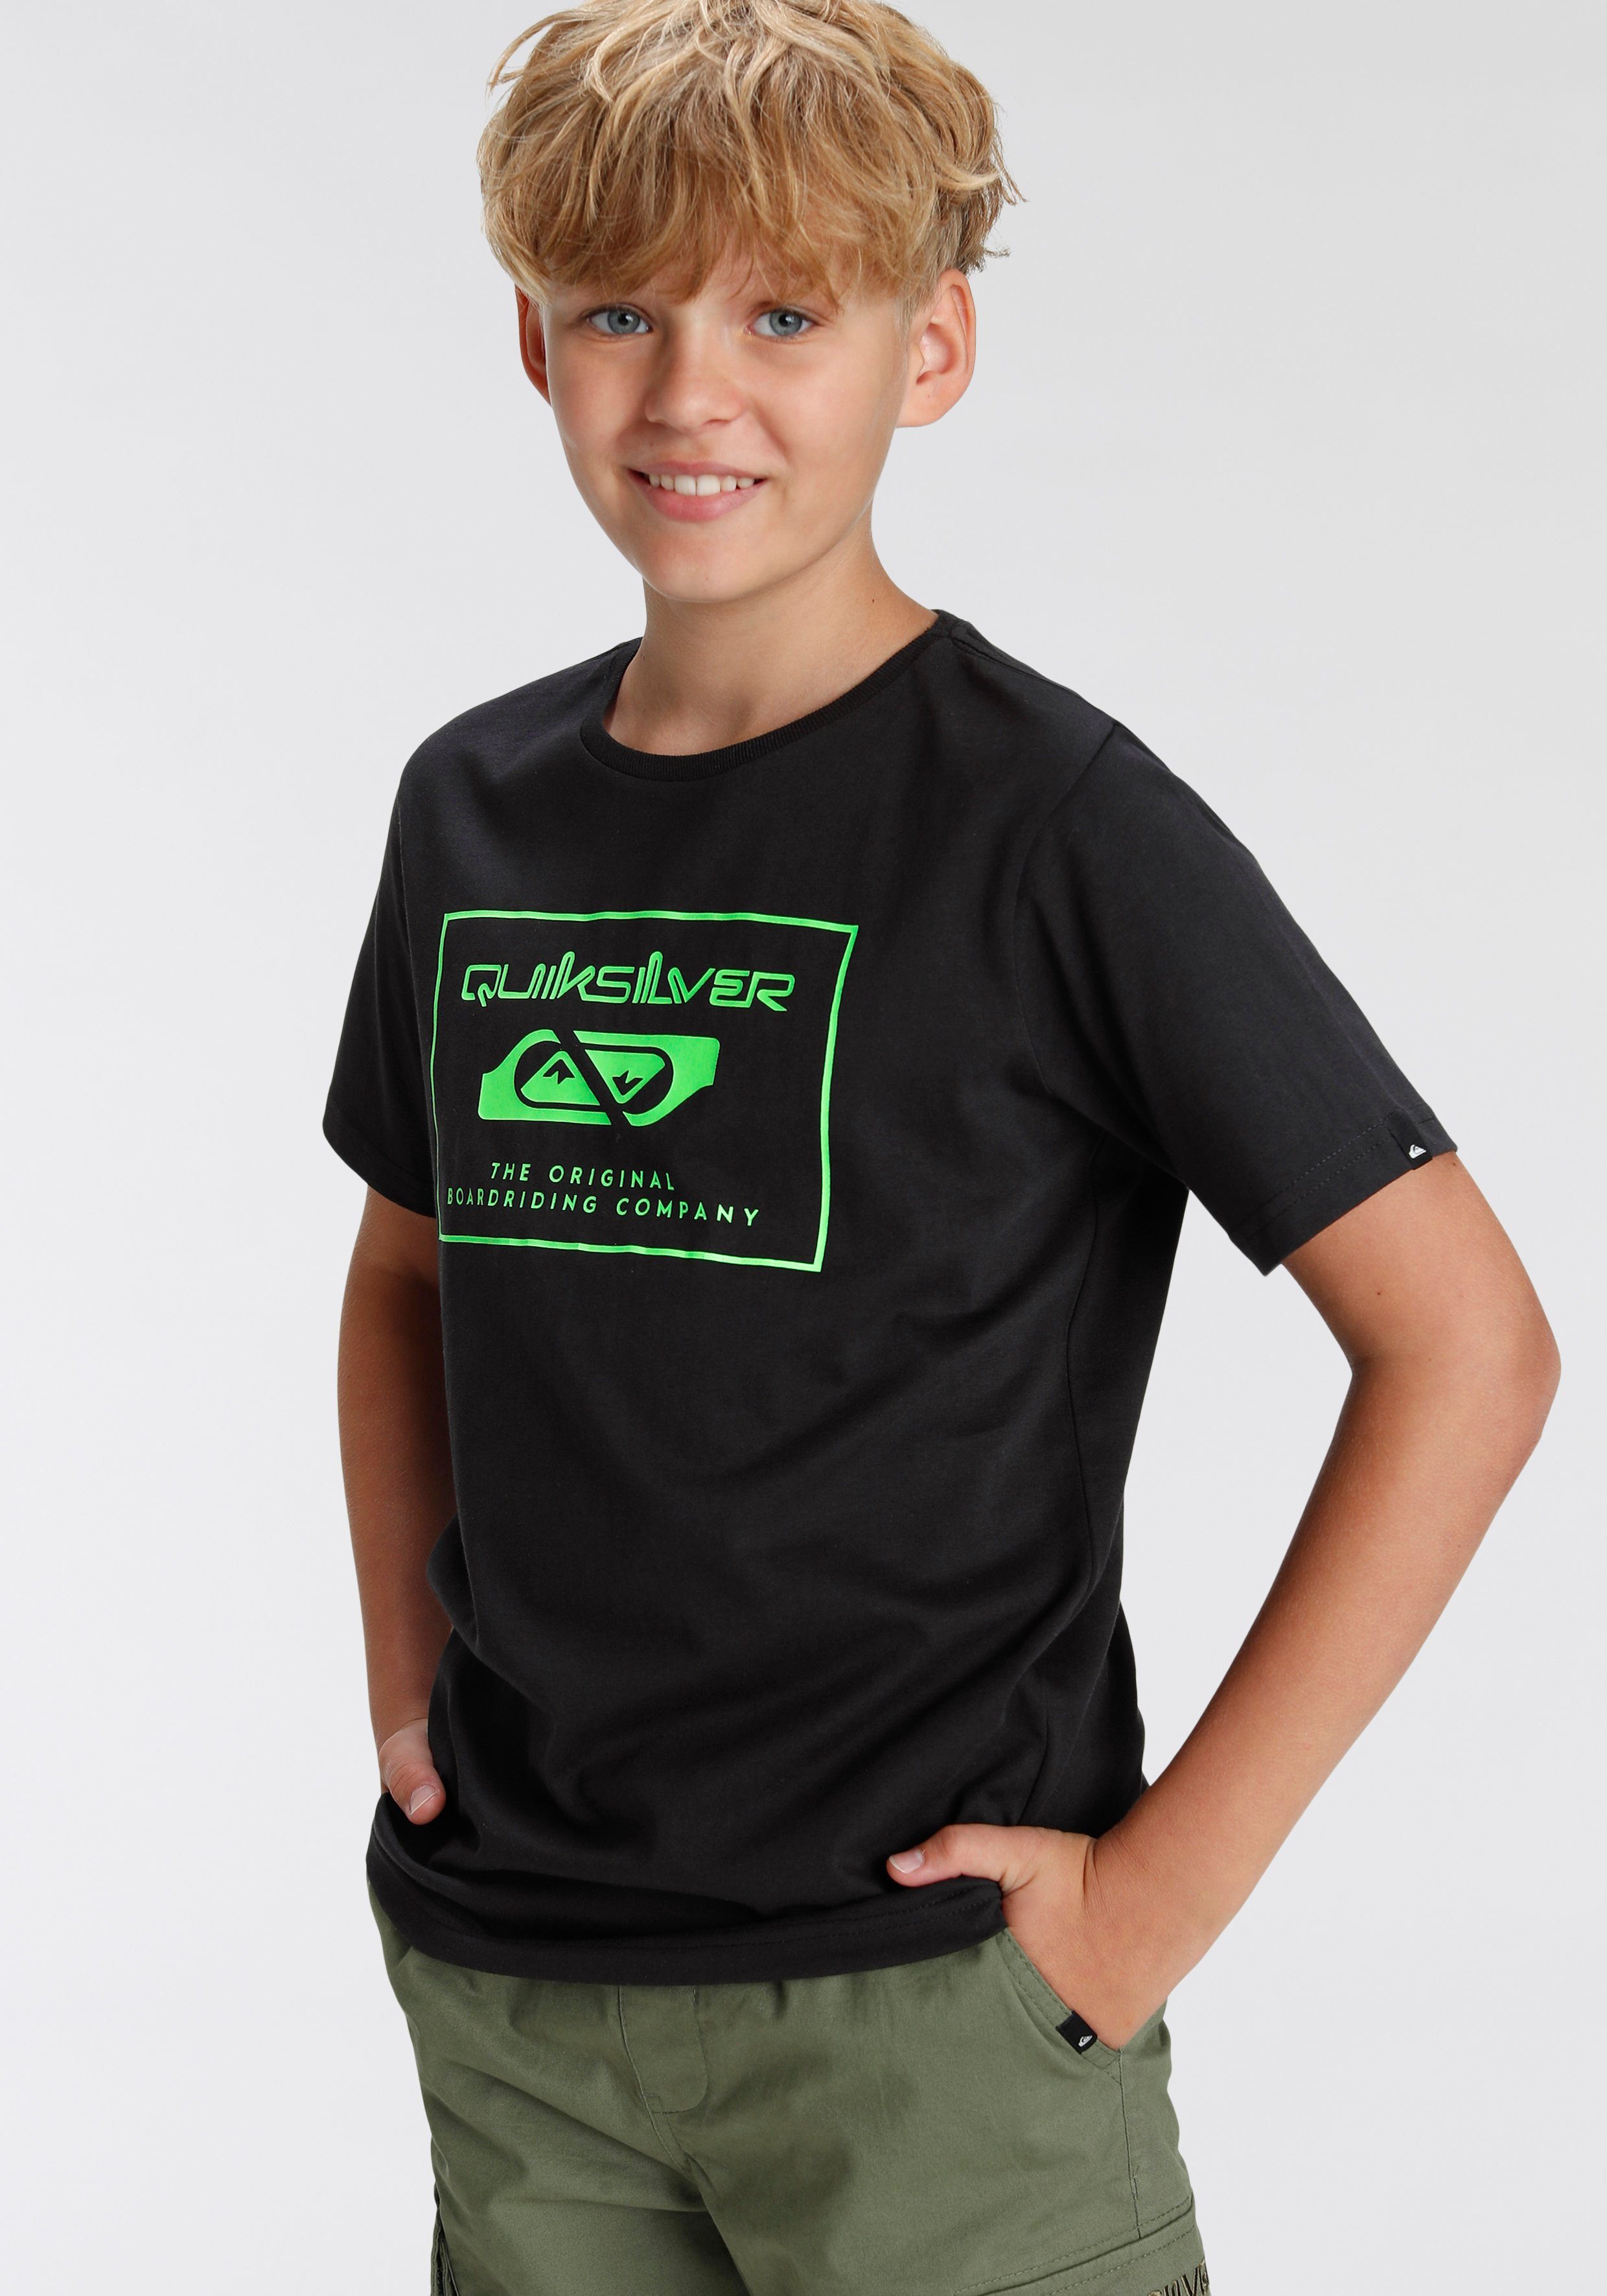 Quiksilver T-Shirt Jungen Doppelpack mit 2-tlg) (Packung, Logodruck